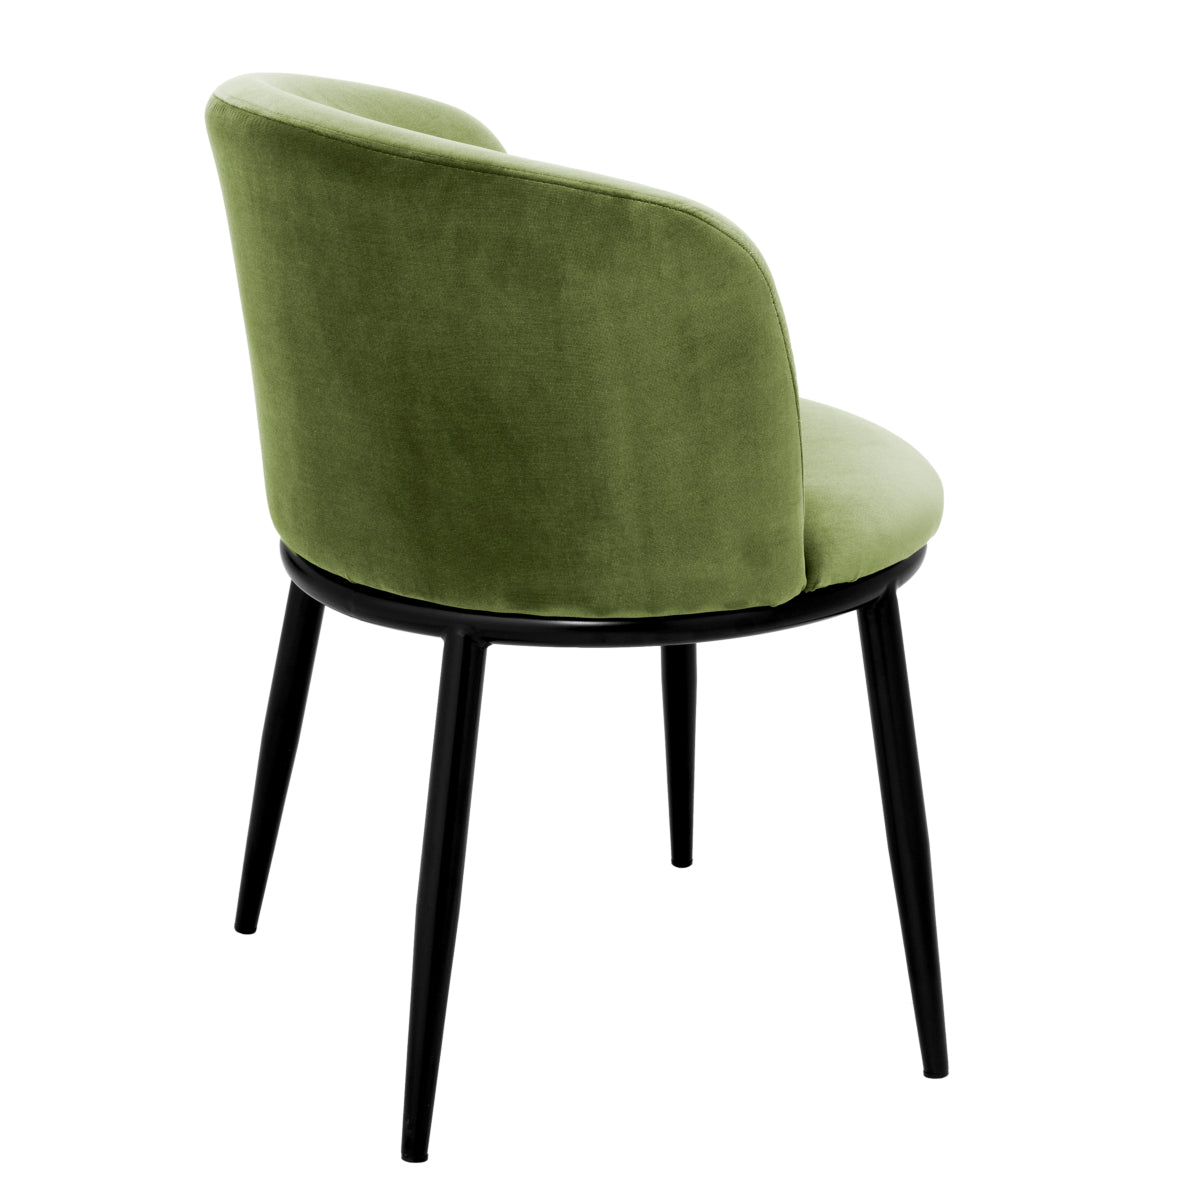 Dining chair Eichholtz Filmore cameron light green